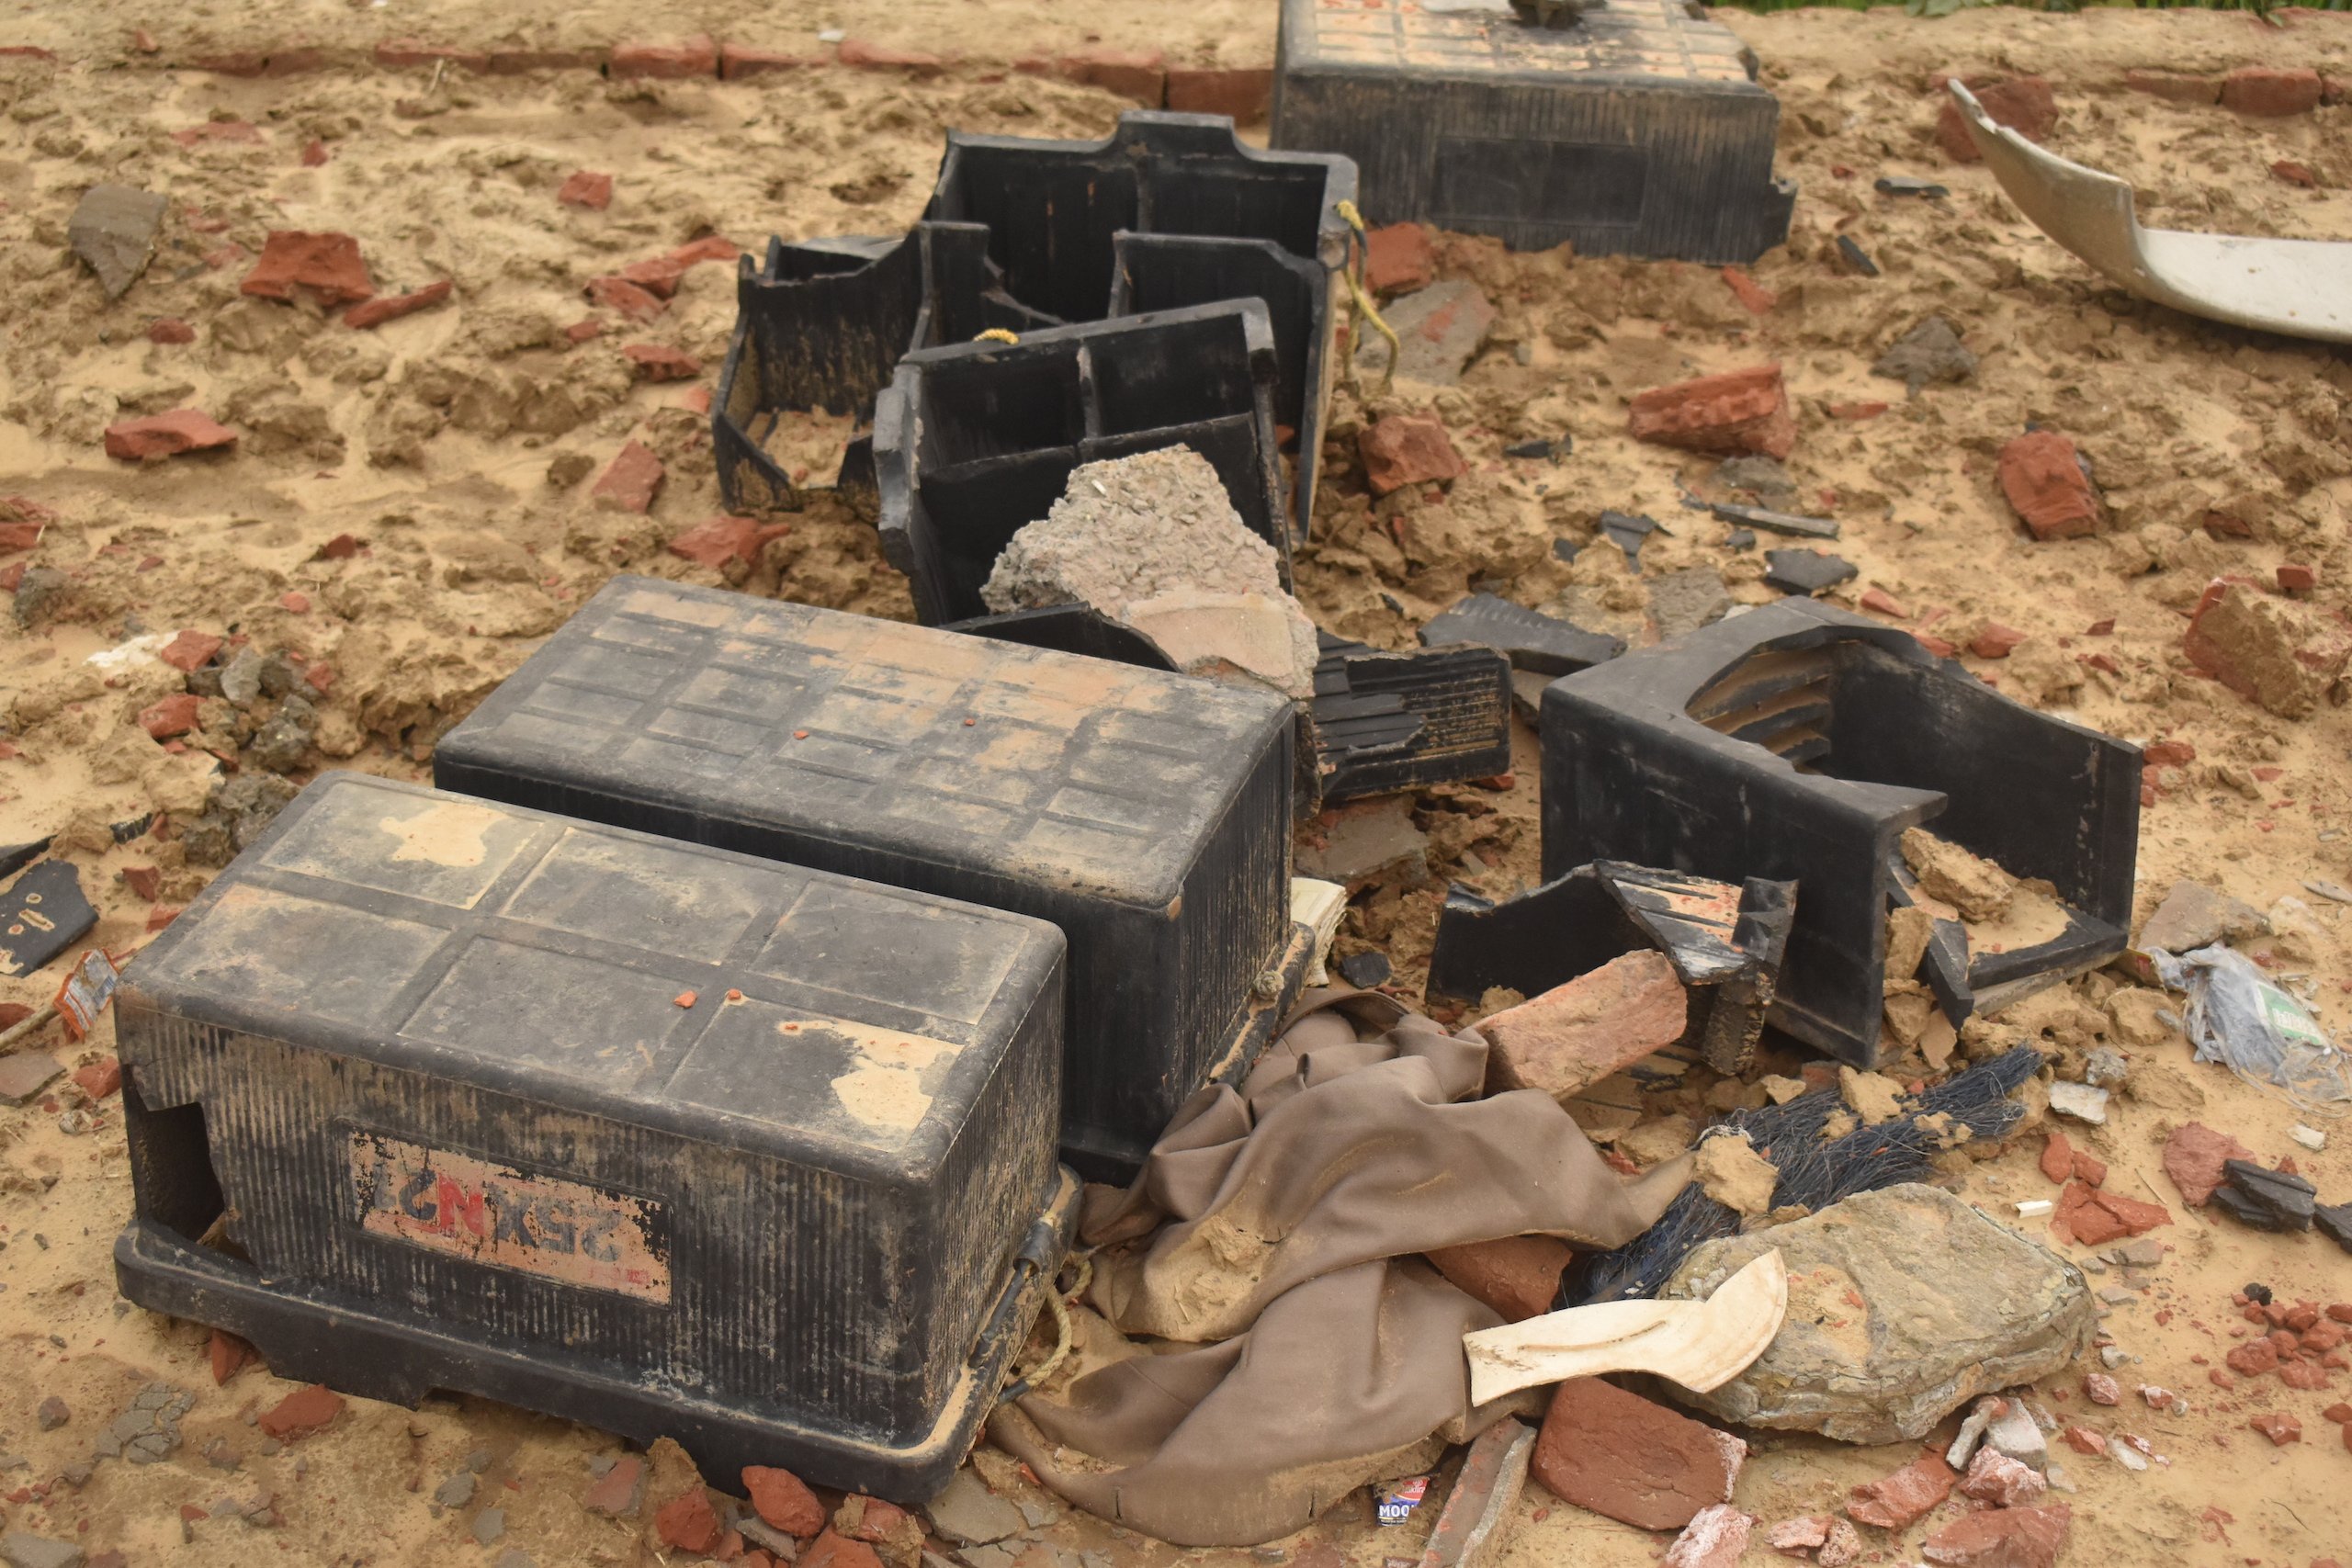 Casings of used lead acid batteries, Monish Upadhyay